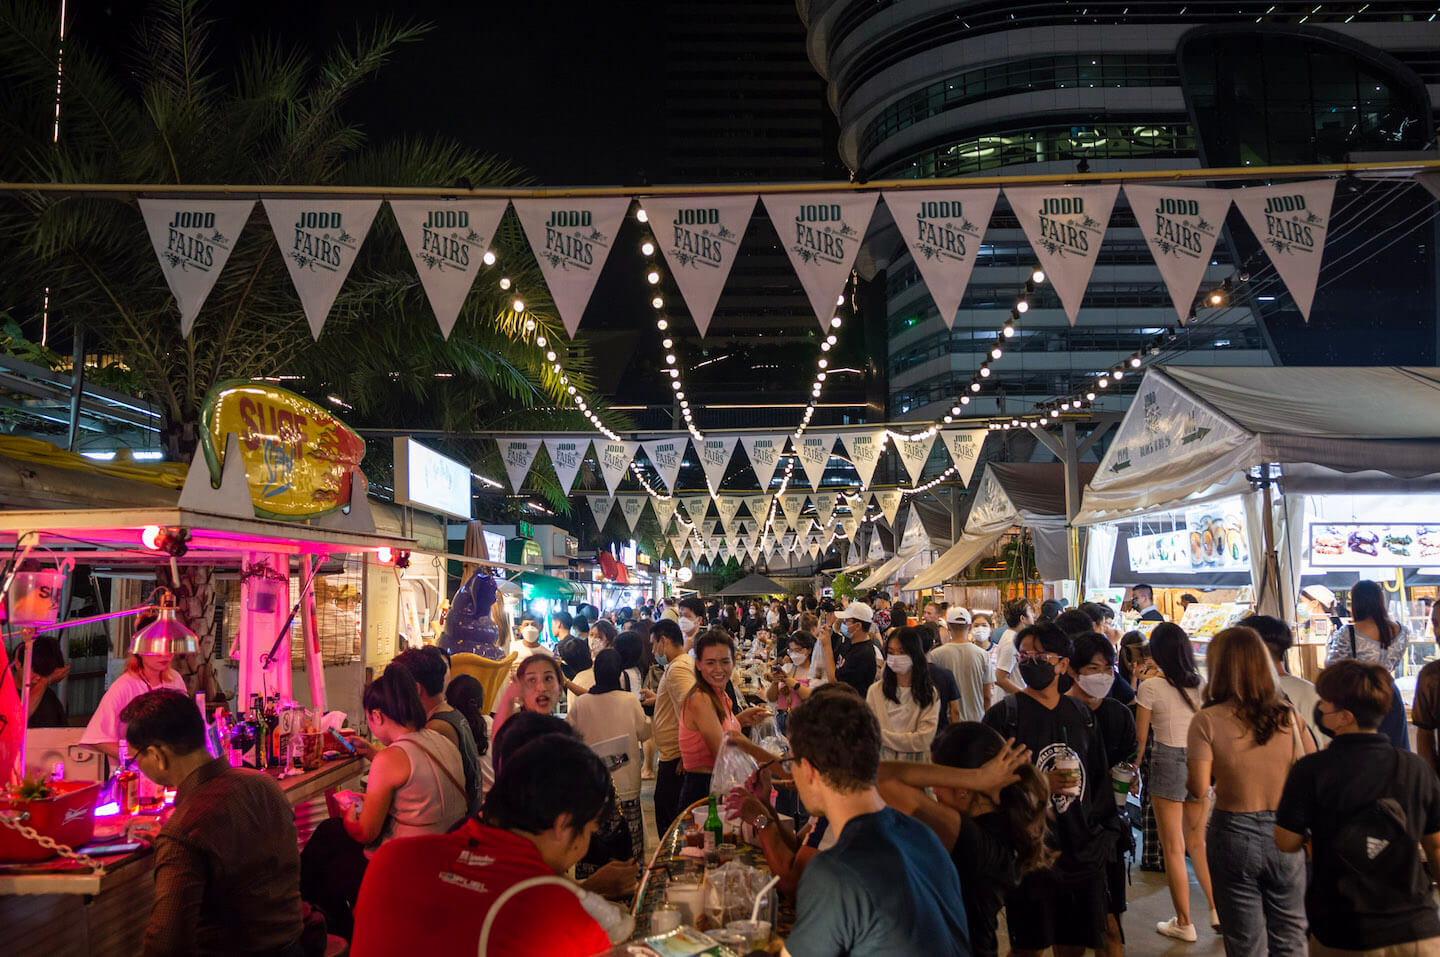 Jodd Fairs Night Market Bangkok